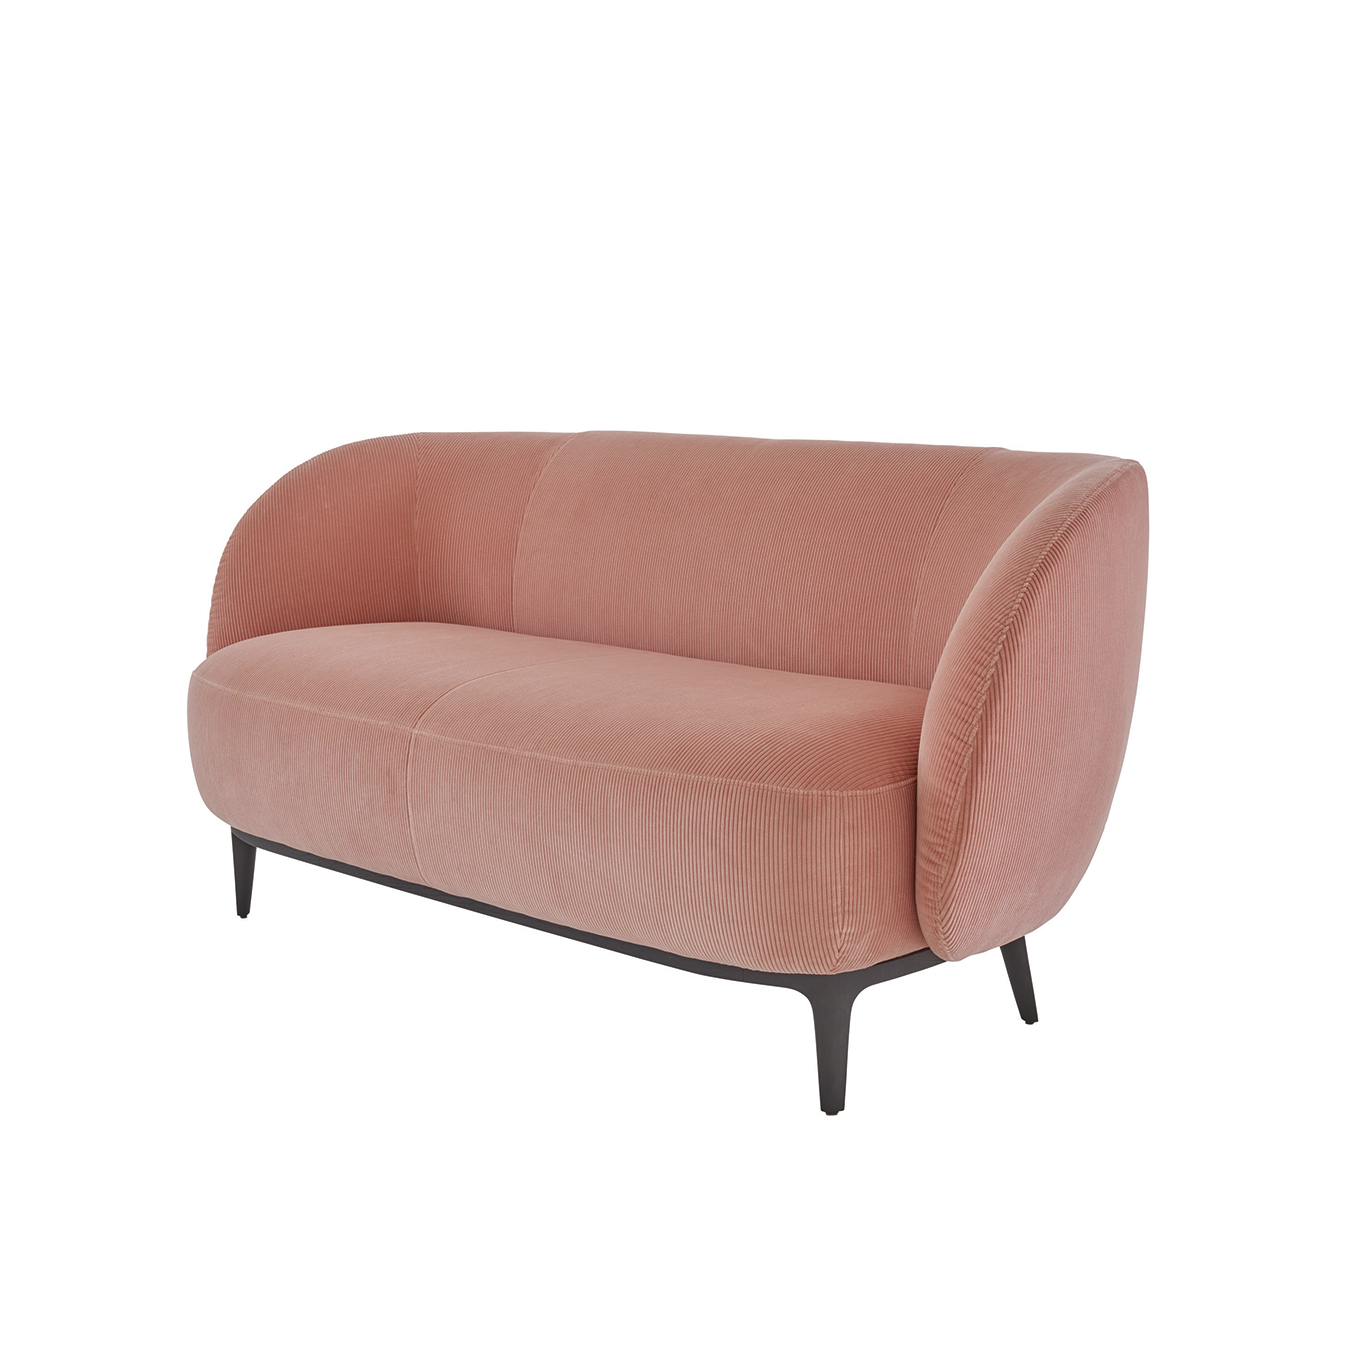 Soufflot seating range for Ligne Roset, sofa, interior design, interior architecture, object design, designer, furniture creation, studio jean-philippe nuel